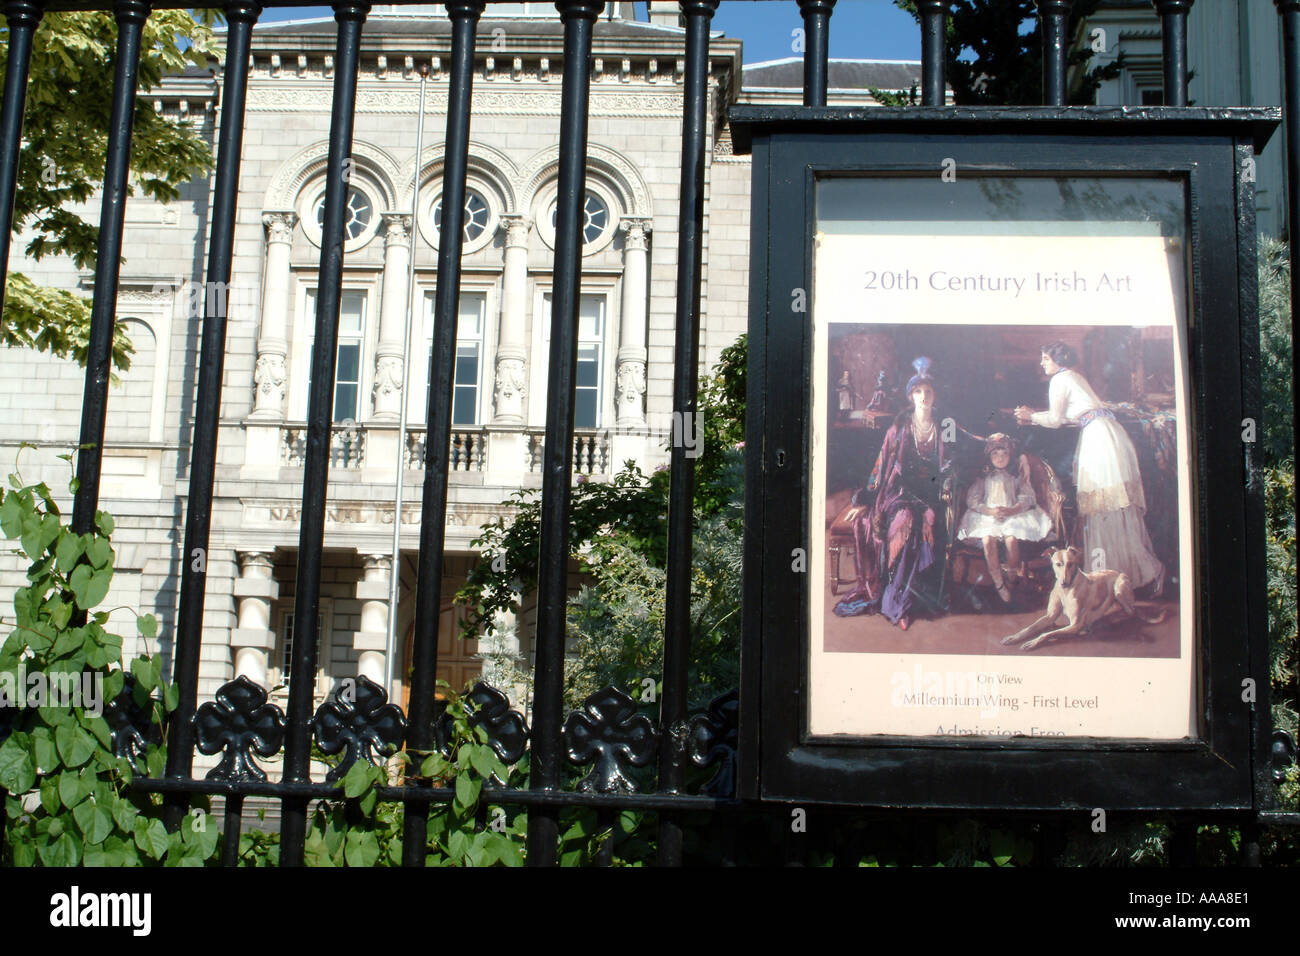 National Gallery am Merrion Square Dublin Irland Stockfoto